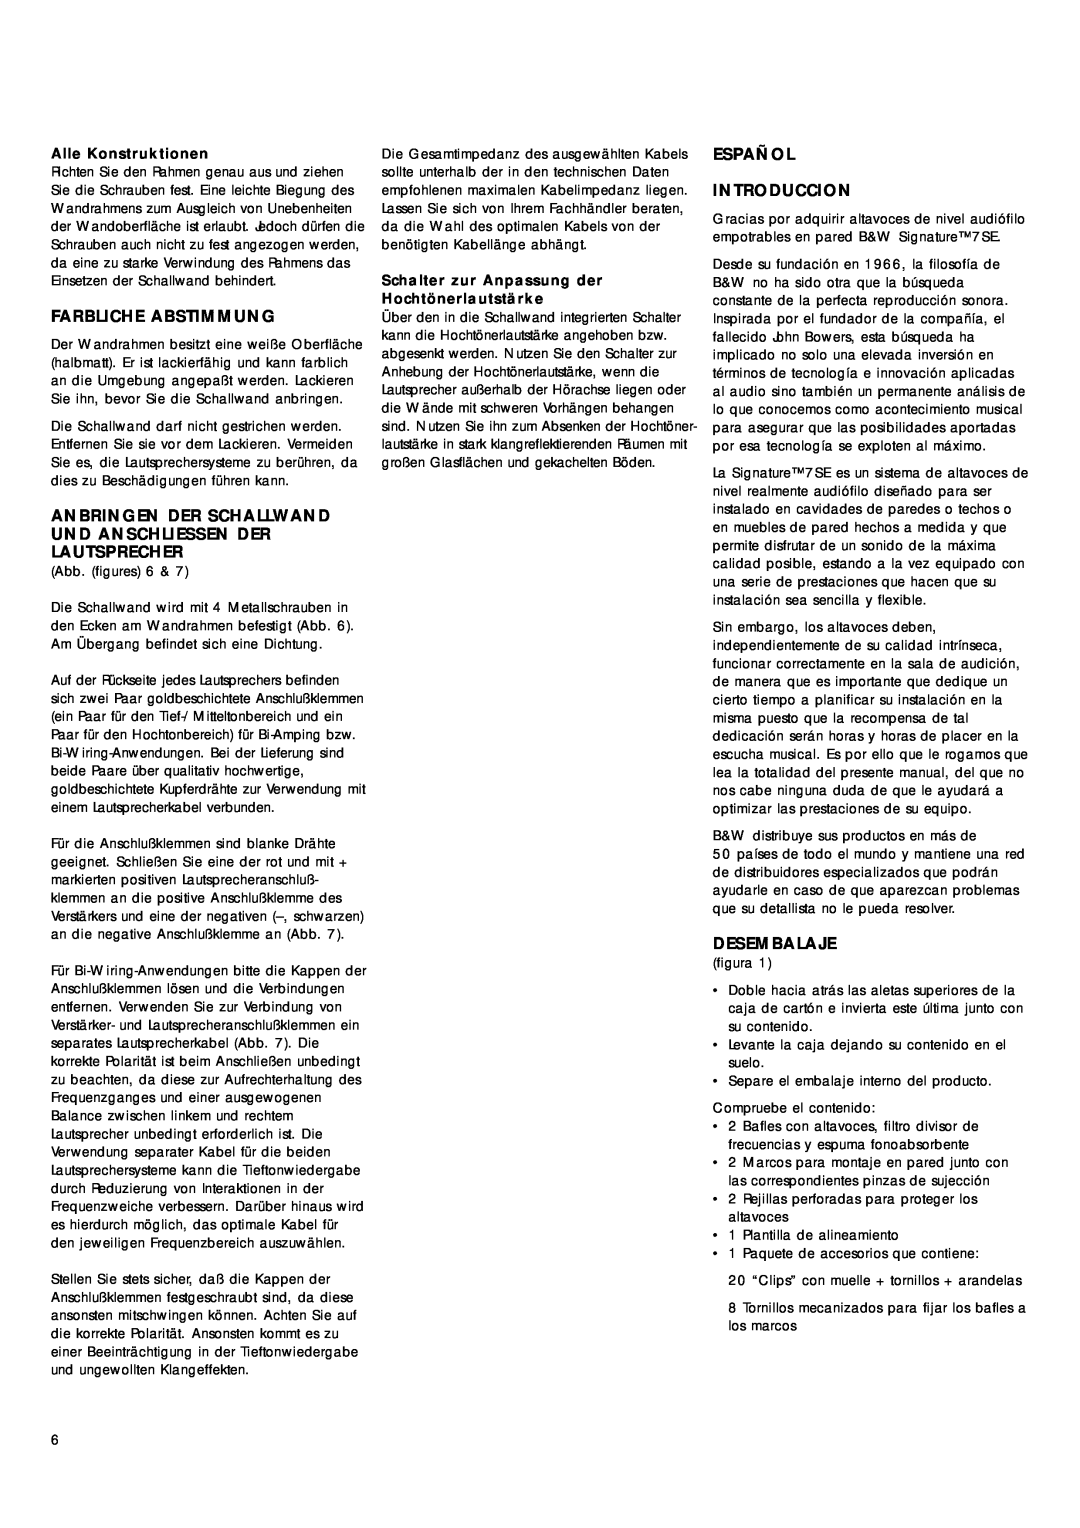 Bowers & Wilkins Signature 7SE owner manual Farbliche Abstimmung, Español Introduccion, Desembalaje, Alle Konstruktionen 